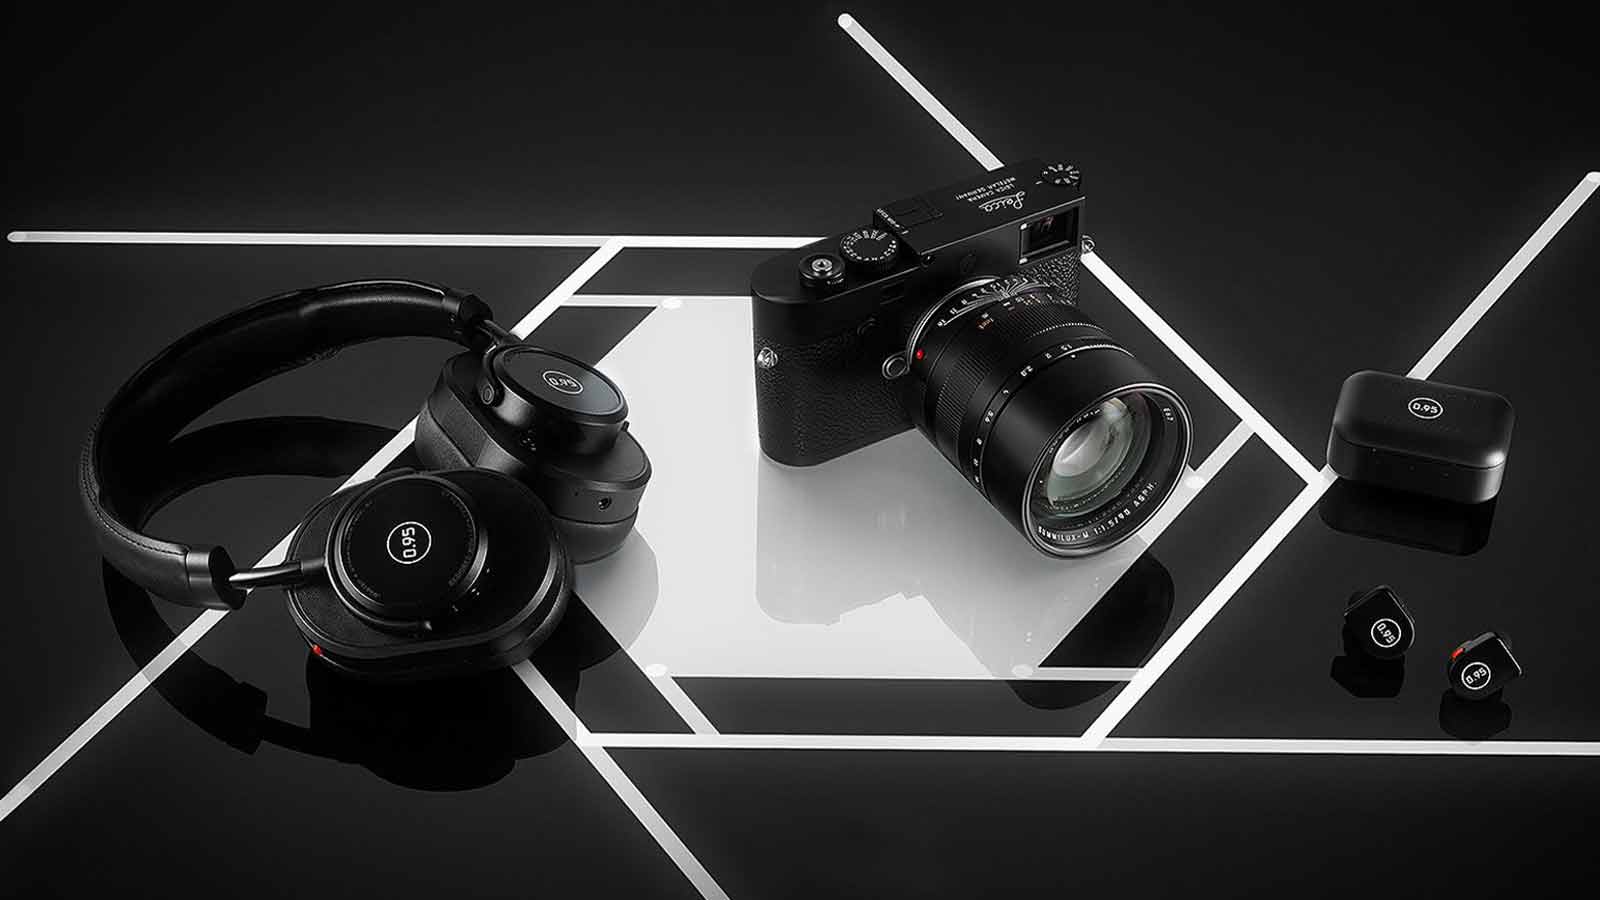 Master & Dynamic x Leica 0.95 Collaboration